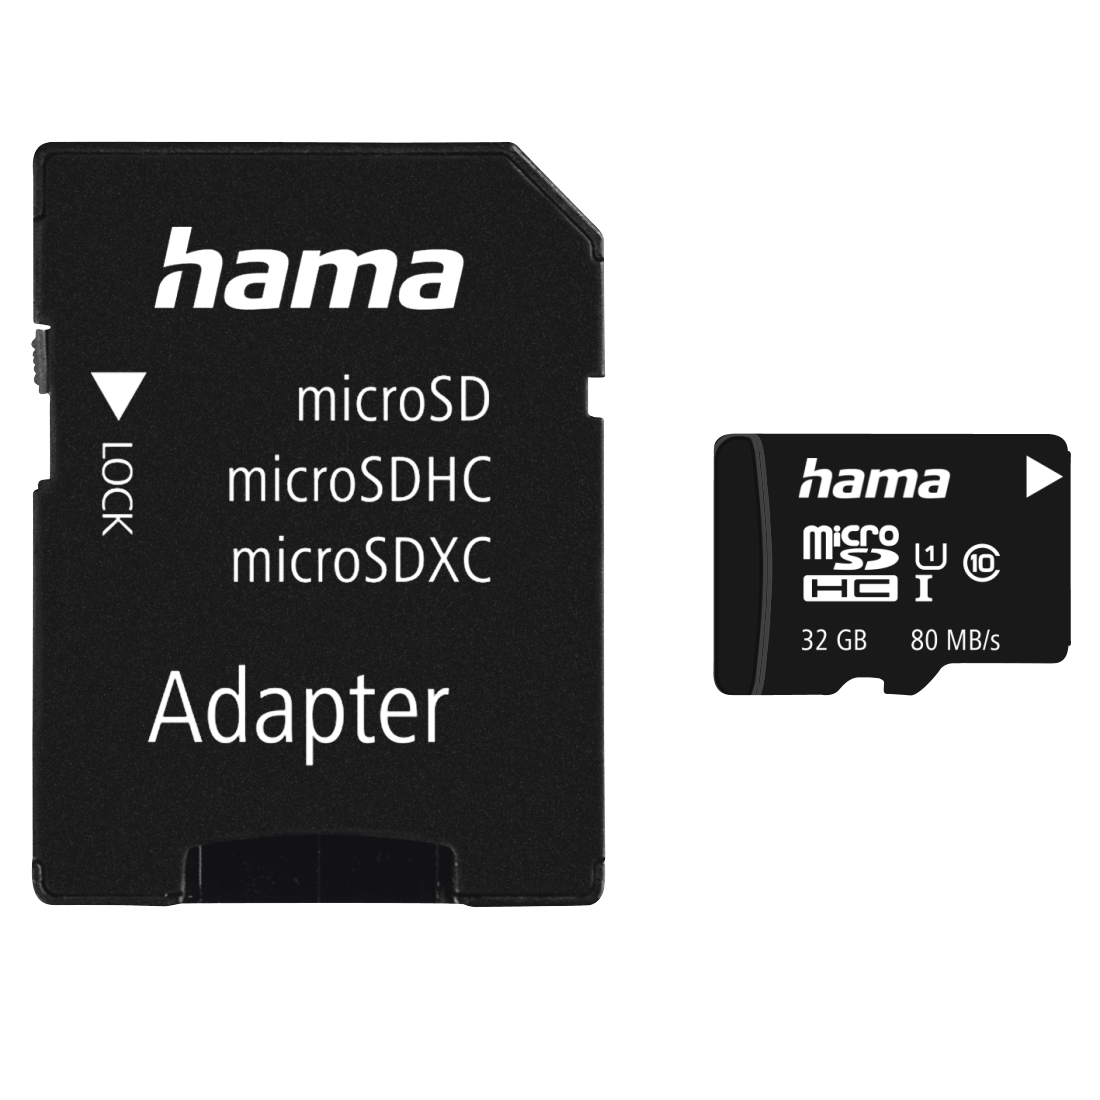 microSDHC 32GB Class 10 UHS-I 80MB/s + Adapter/Mobile | Hama